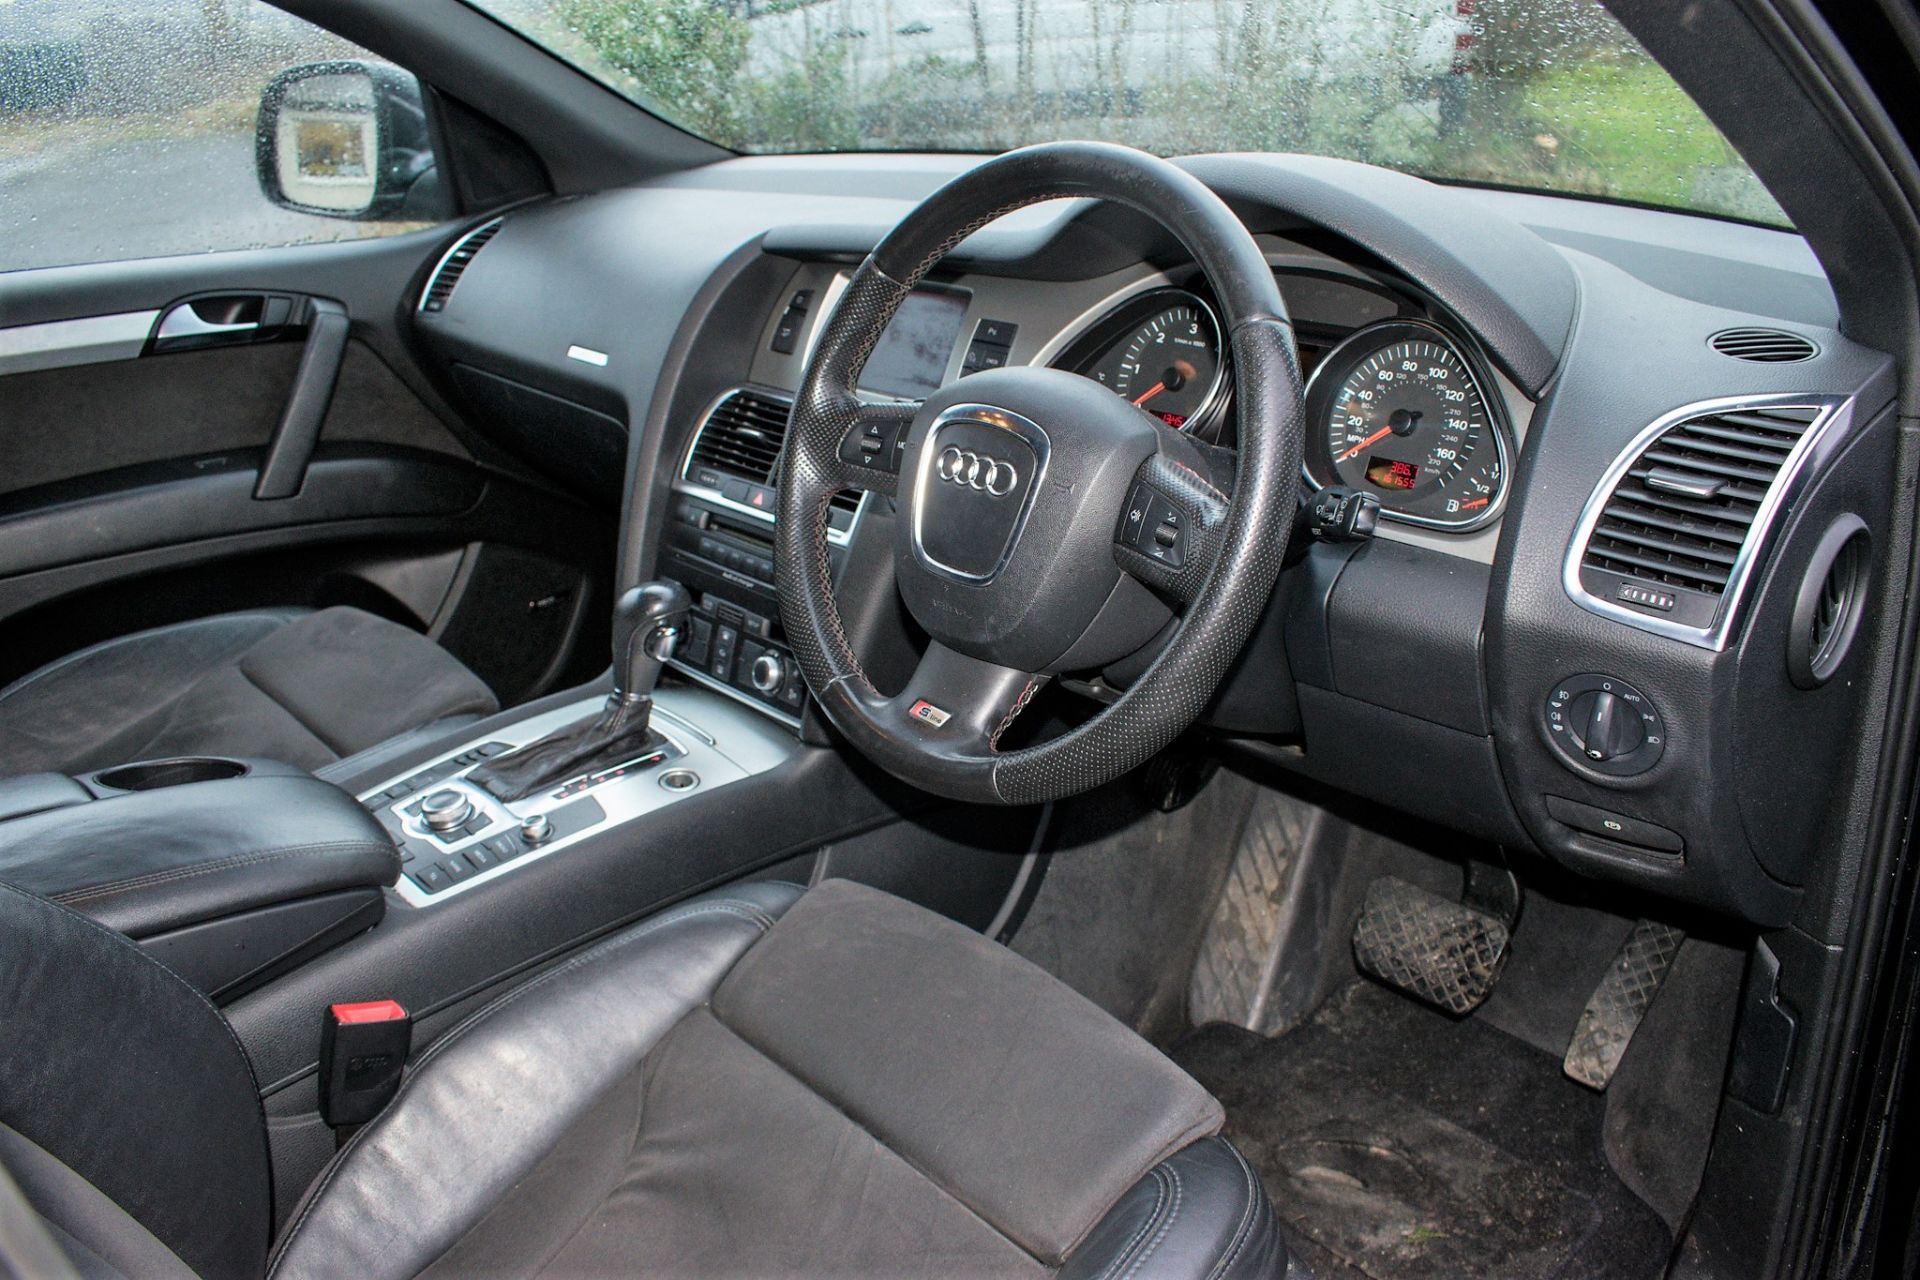 Audi Q7 3.0 TDi S-Line Auto 5 door sports utility vehicle - Image 13 of 22